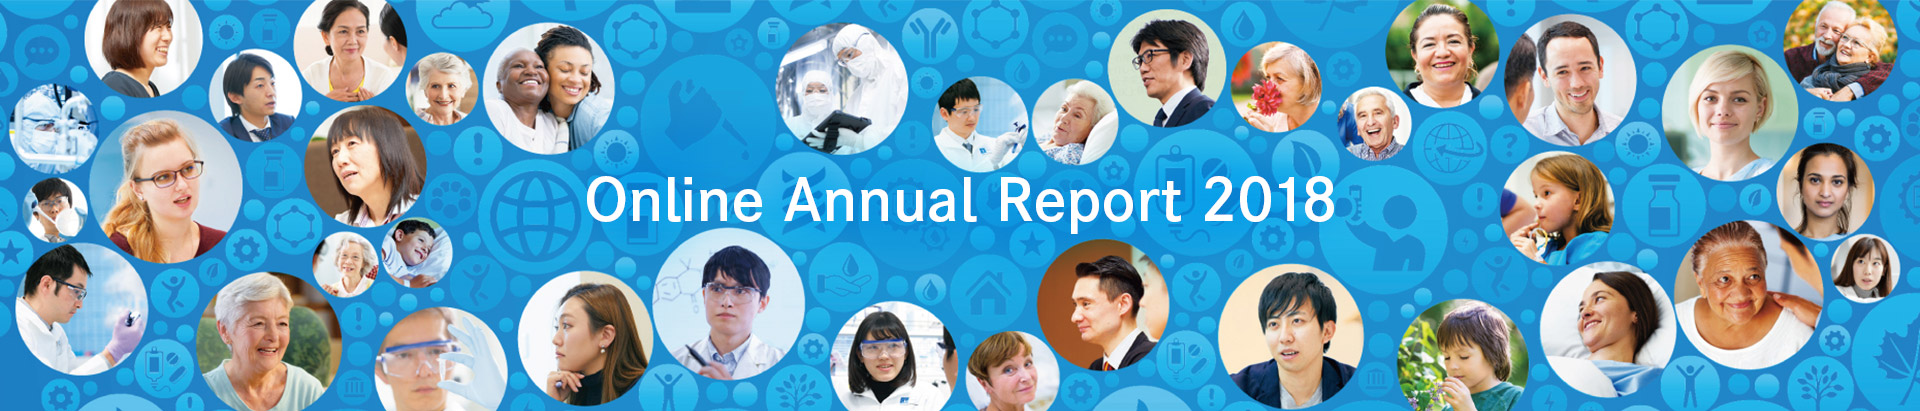 Chugai Pharmaceutical Co., Ltd. | Online Annual Report 2018 Roche Group